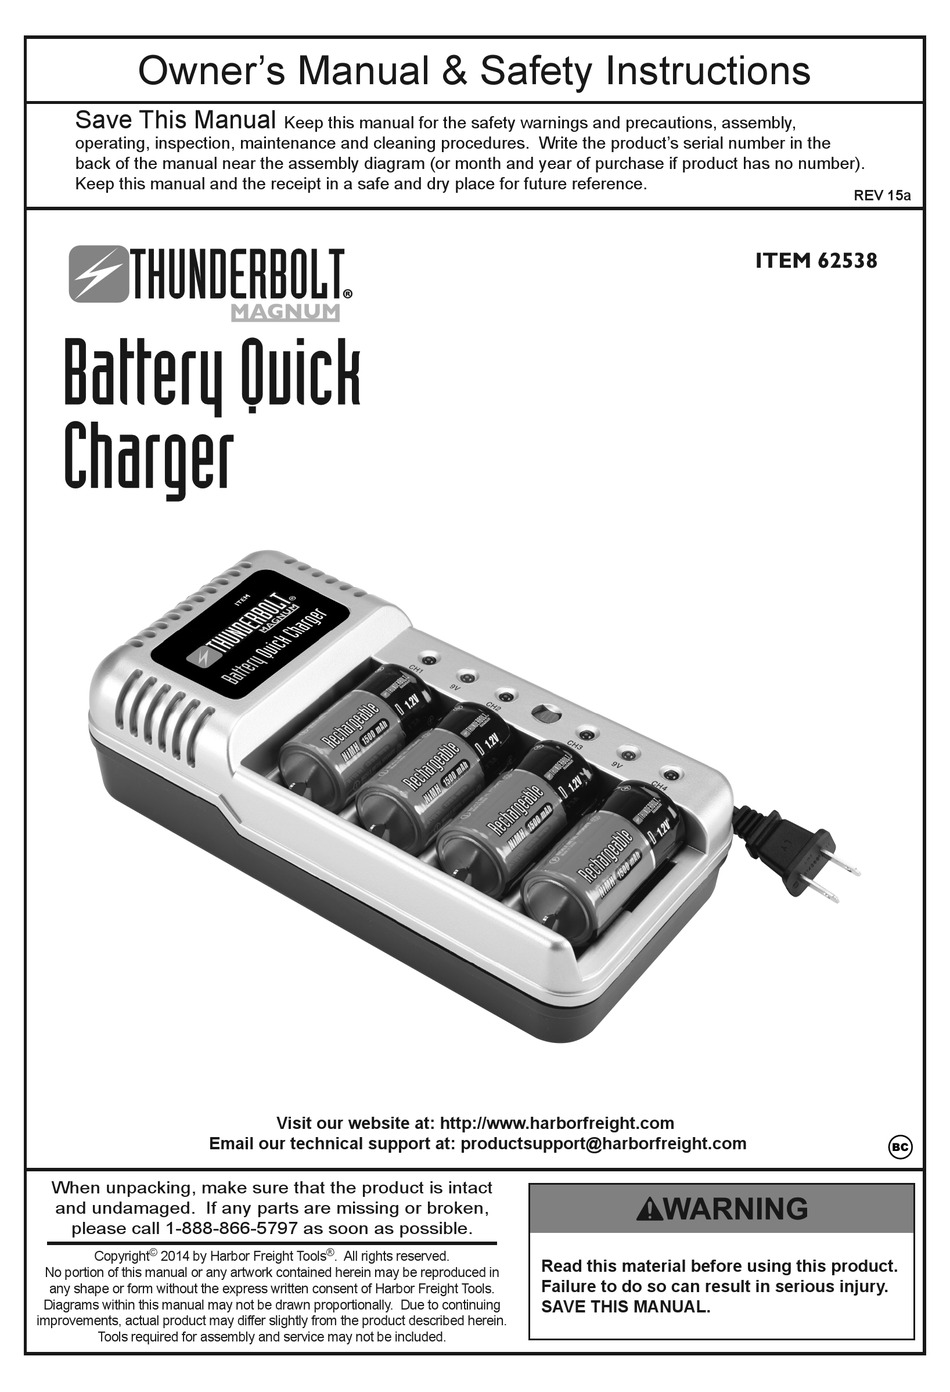 THUNDERBOLT MAGNUM 62538 OWNER'S MANUAL & SAFETY INSTRUCTIONS Pdf Thunderbolt 100 Watt Solar Charge Regulator Manual